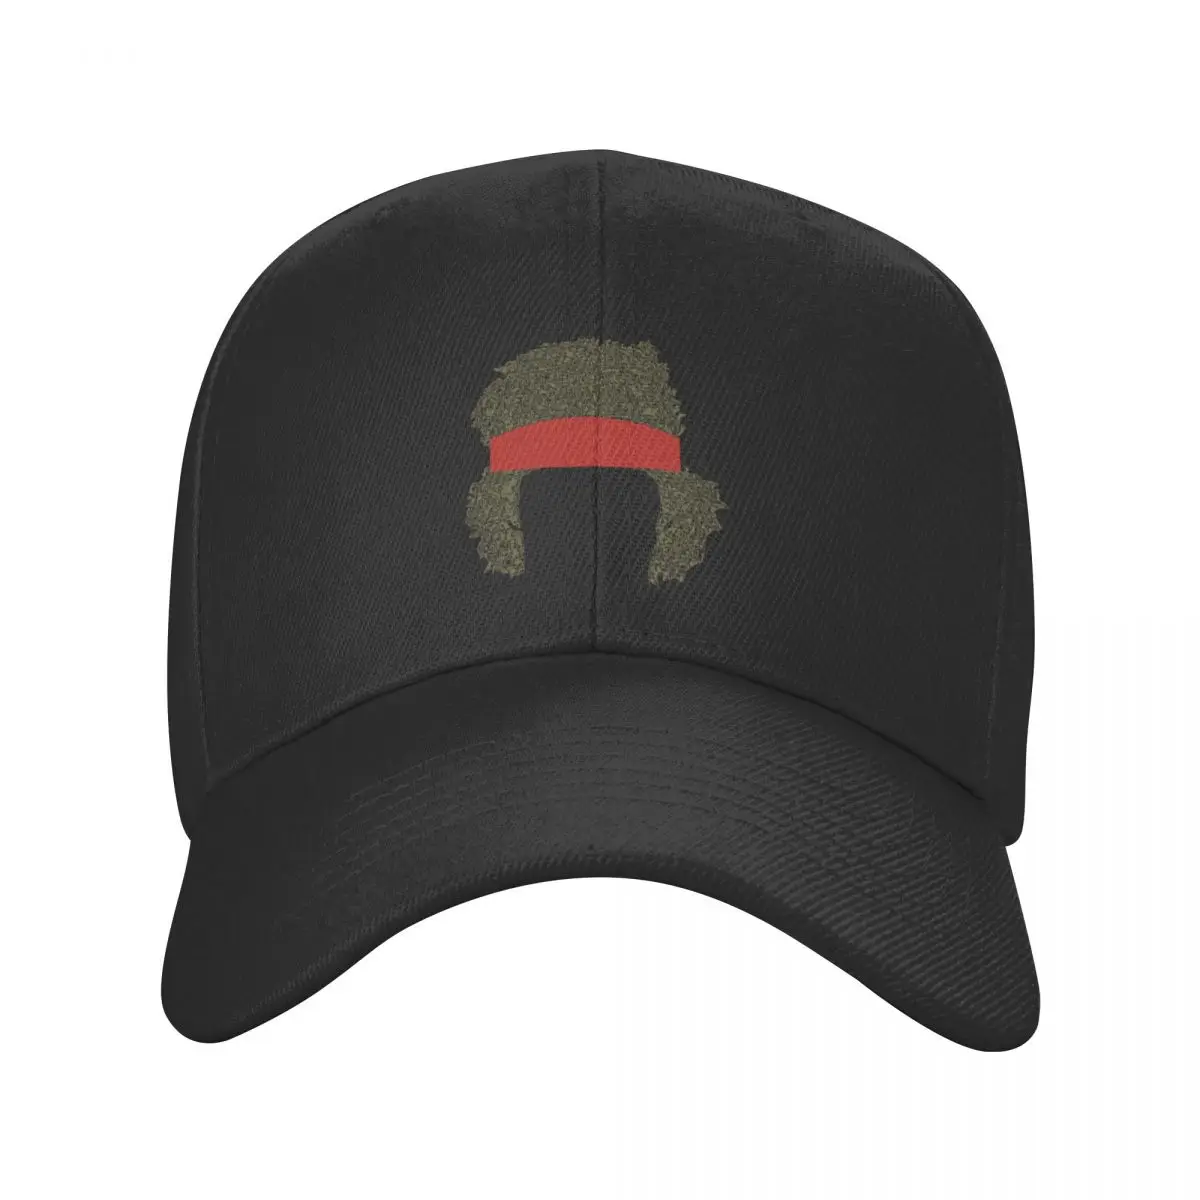 Mcenroe Adesivo Boné de Beisebol Praia de espuma de chapéus do partido, personalizado chapéus de Praia, Passeio de Menina Chapéus dos Homens